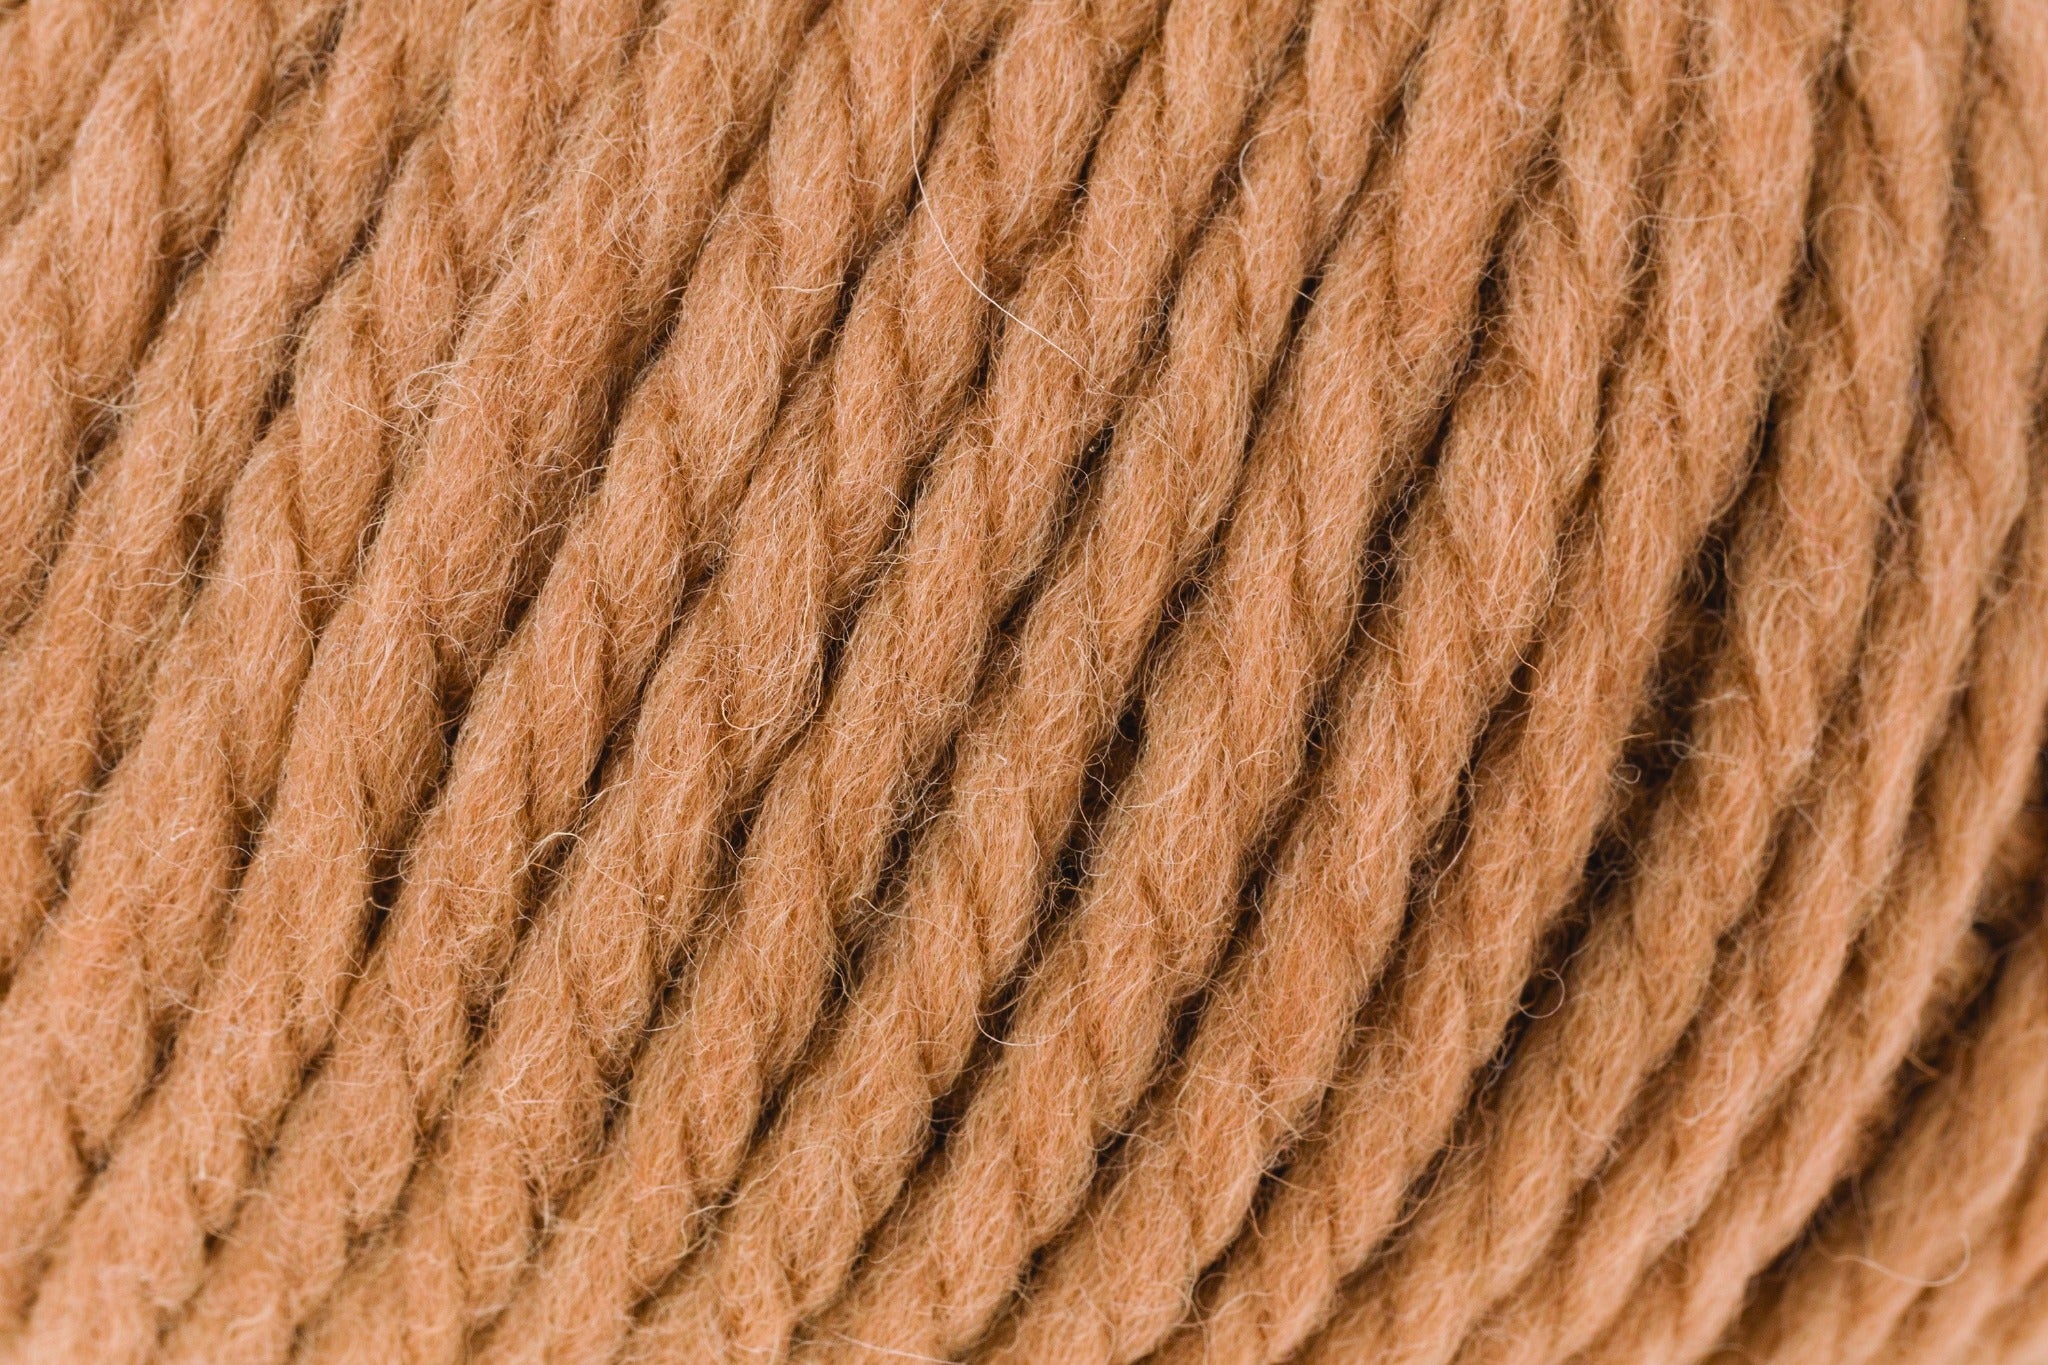 Rowan Big Wool Biscotti-082